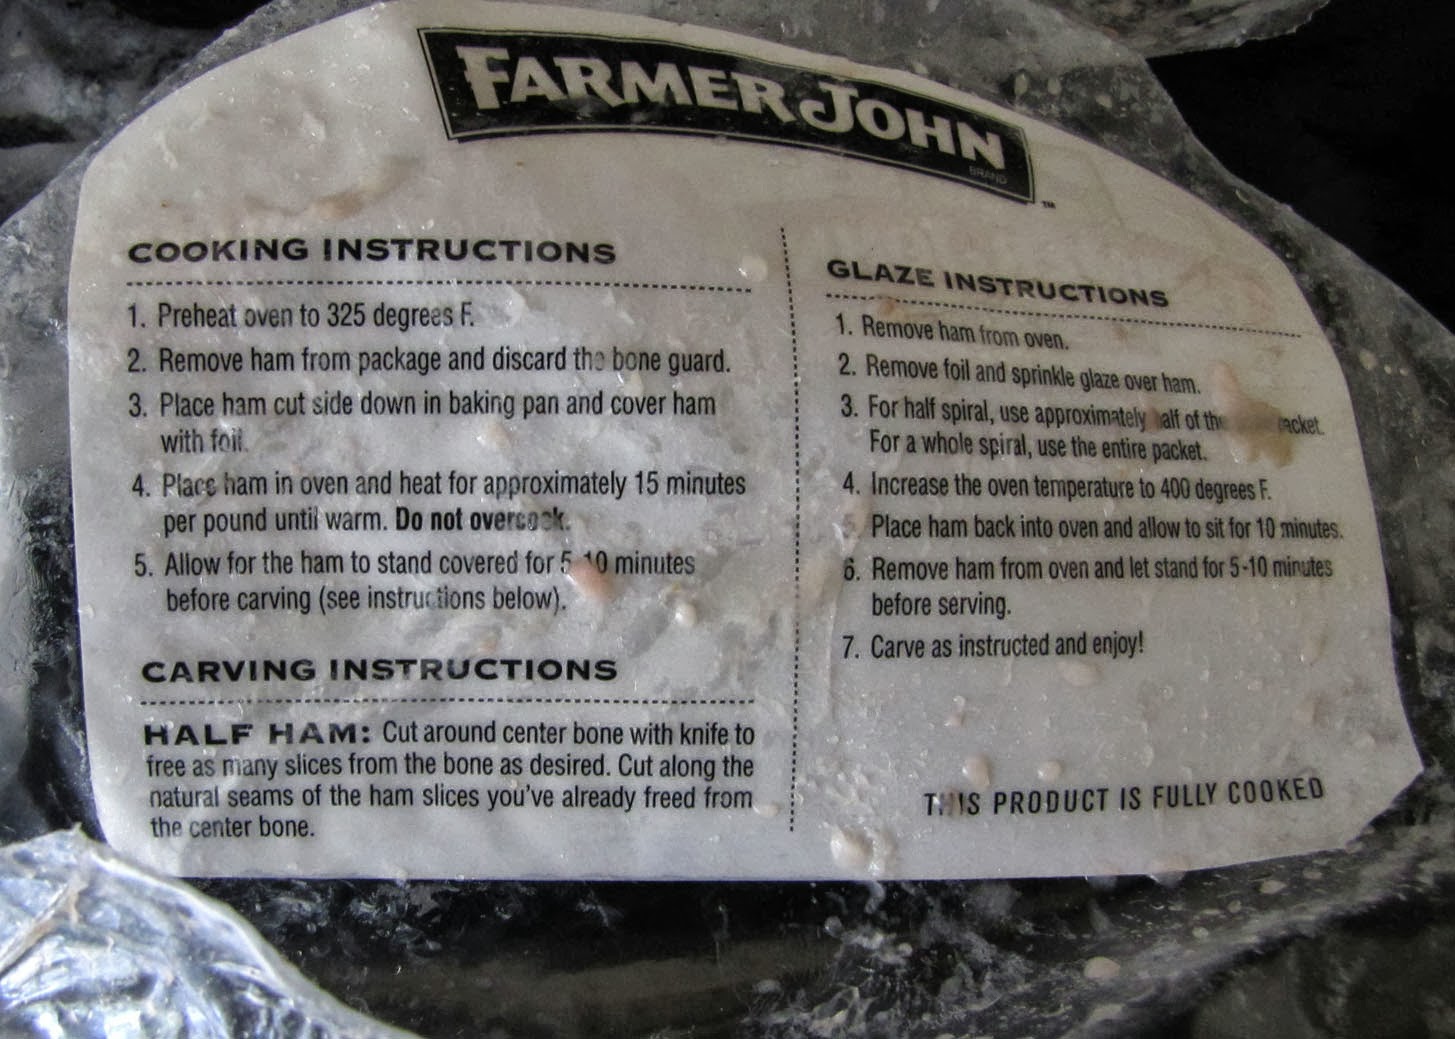 Smells Like Food in Here: Farmer John Spiral-Sliced Ham Sam's Choice Spiral Cut Ham Glaze Instructions